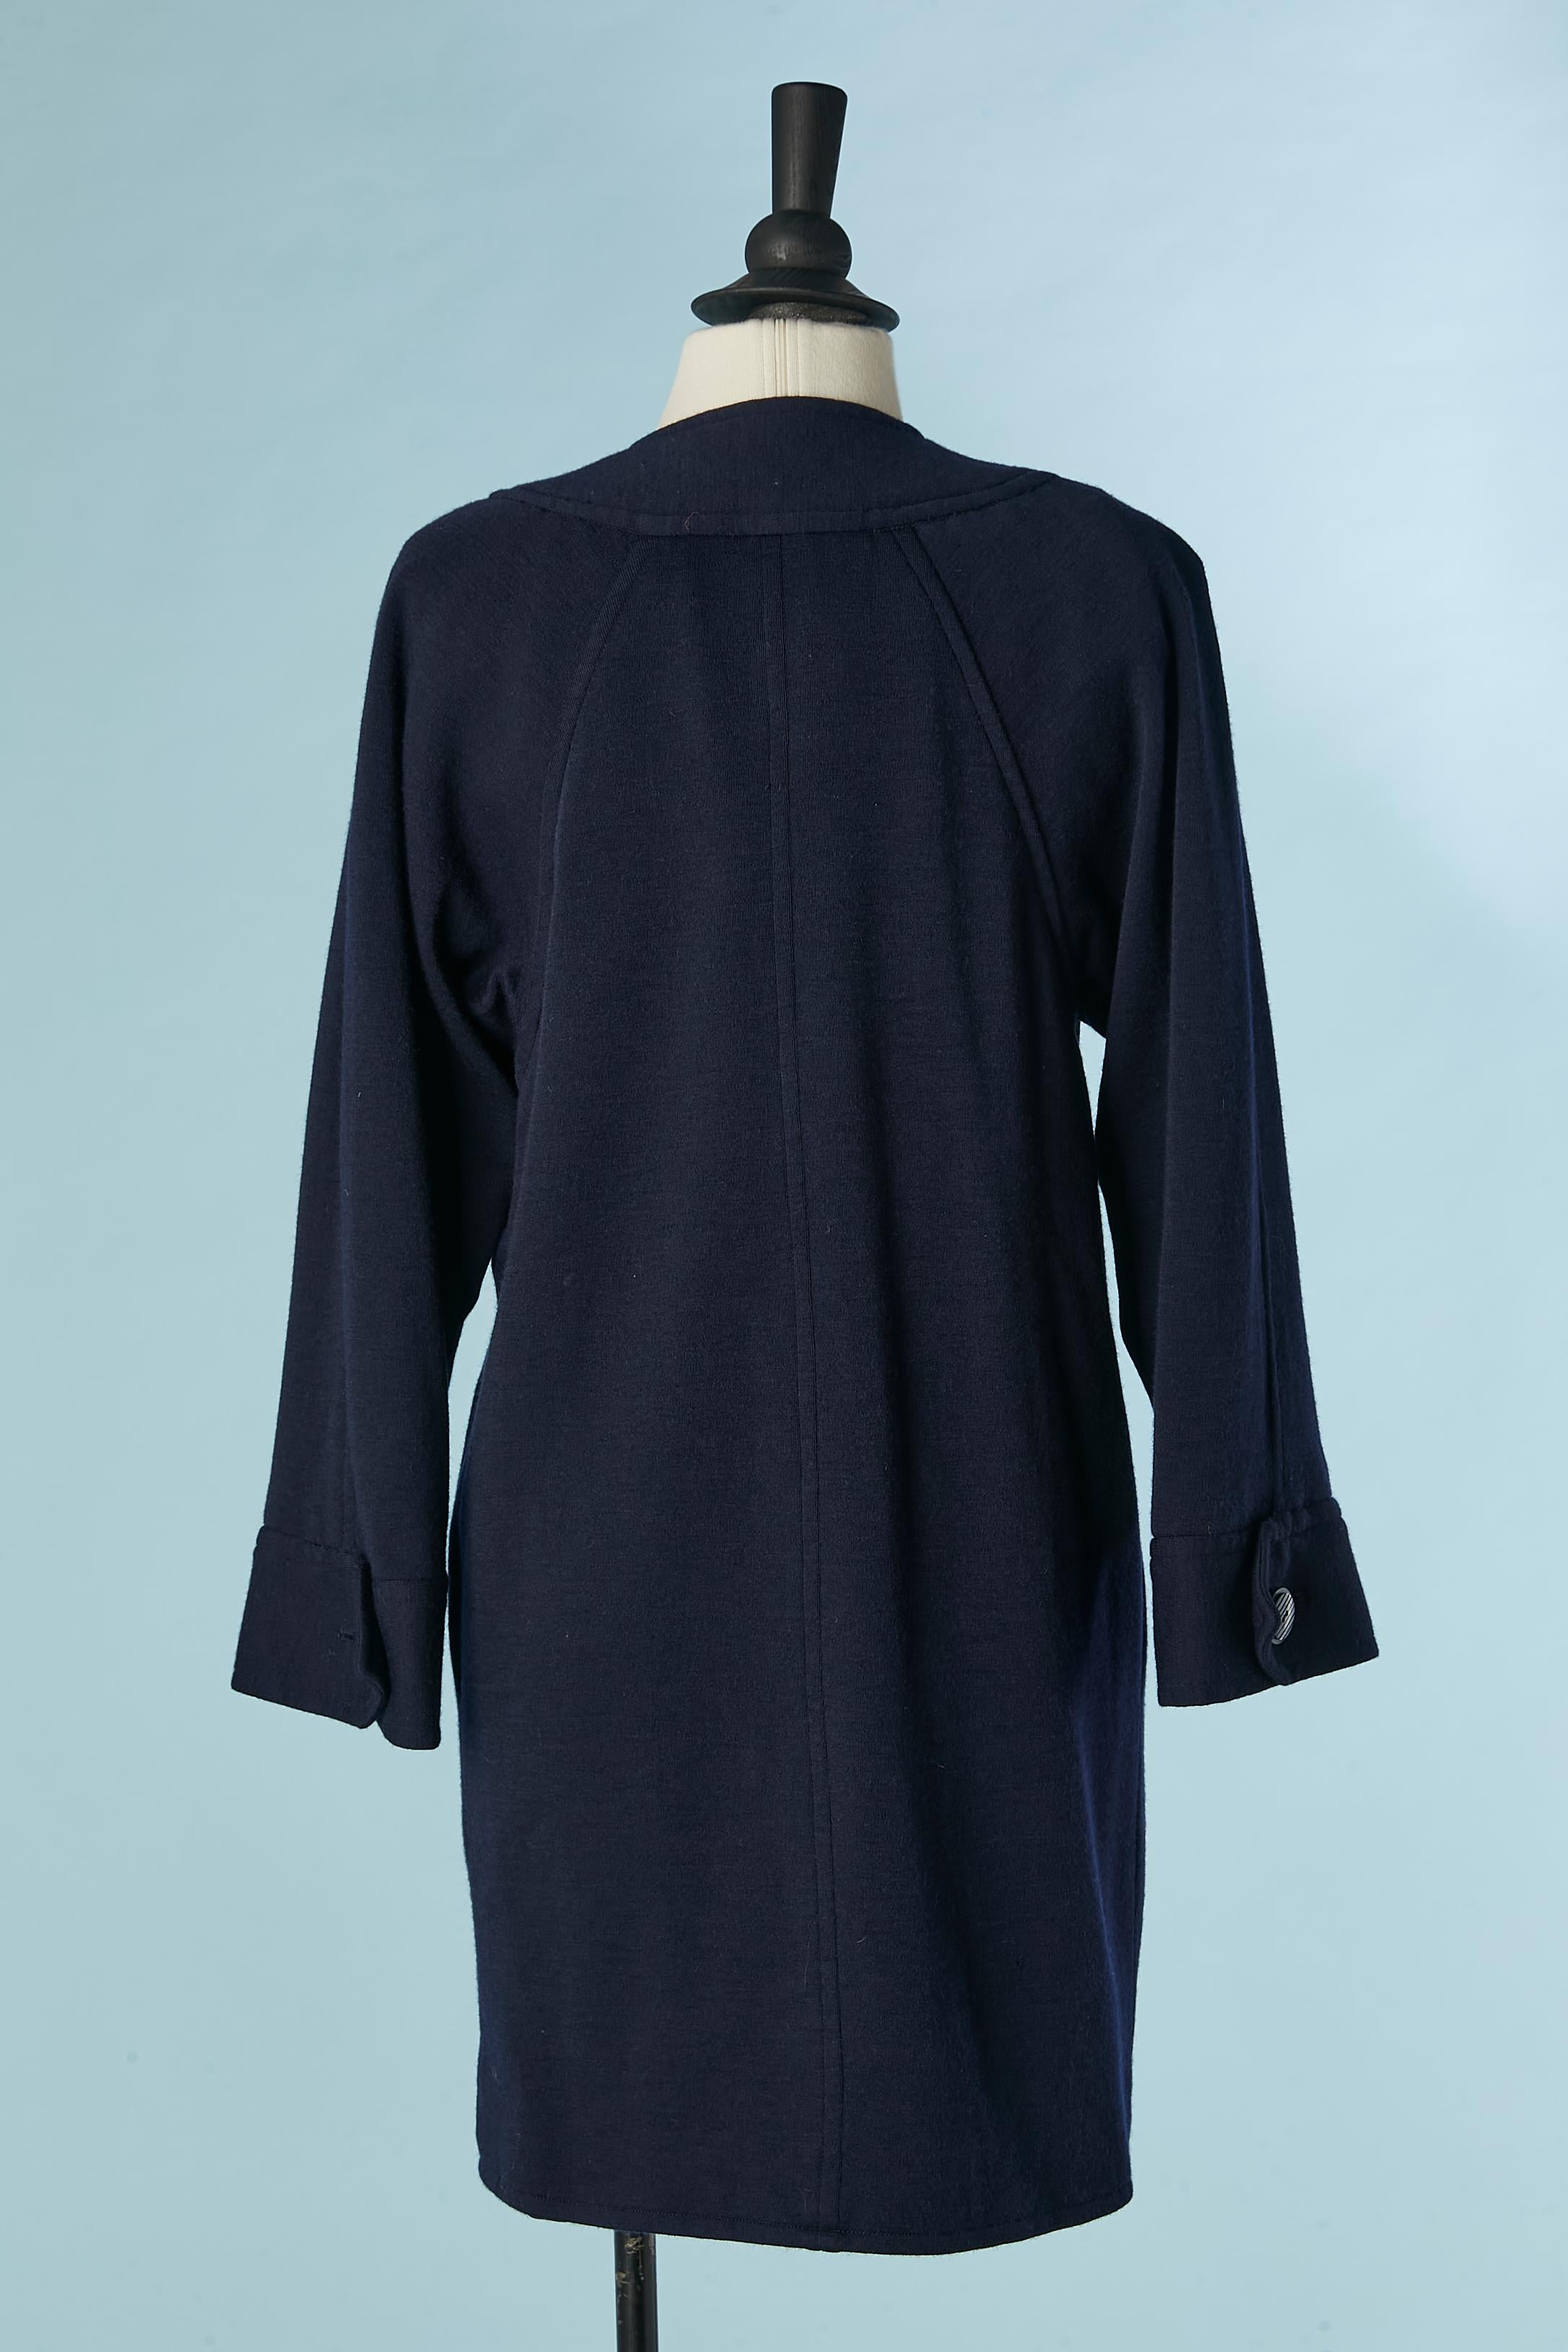 Navy blue wool jersey long jacket with button closure Saint Laurent Rive Gauche  For Sale 1